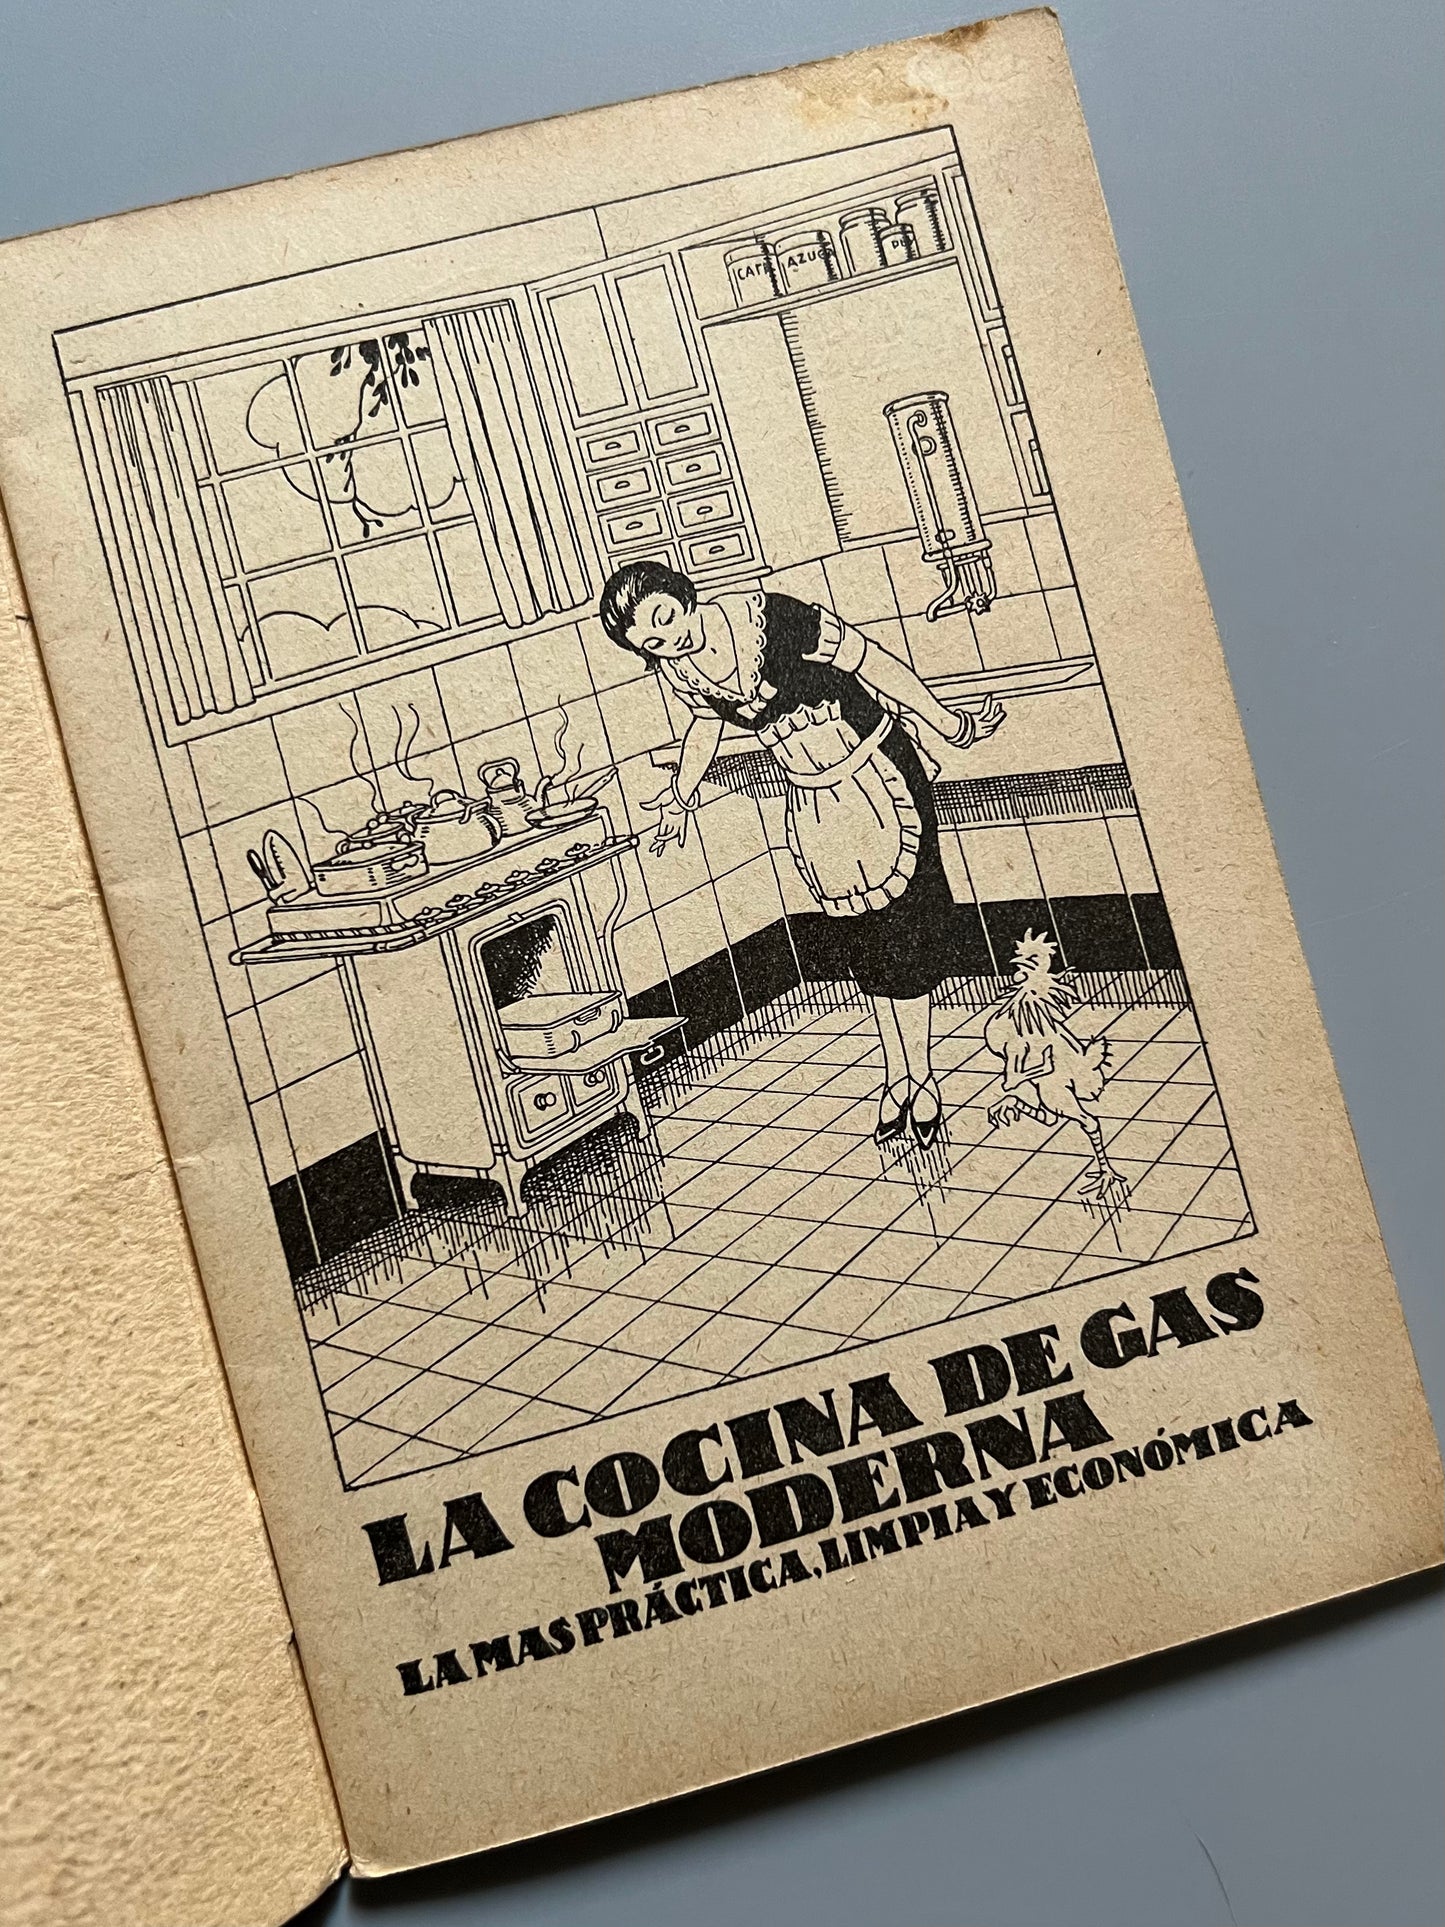 Calendario - Catálogo Catalana de Gas Electricidad - Año 1927